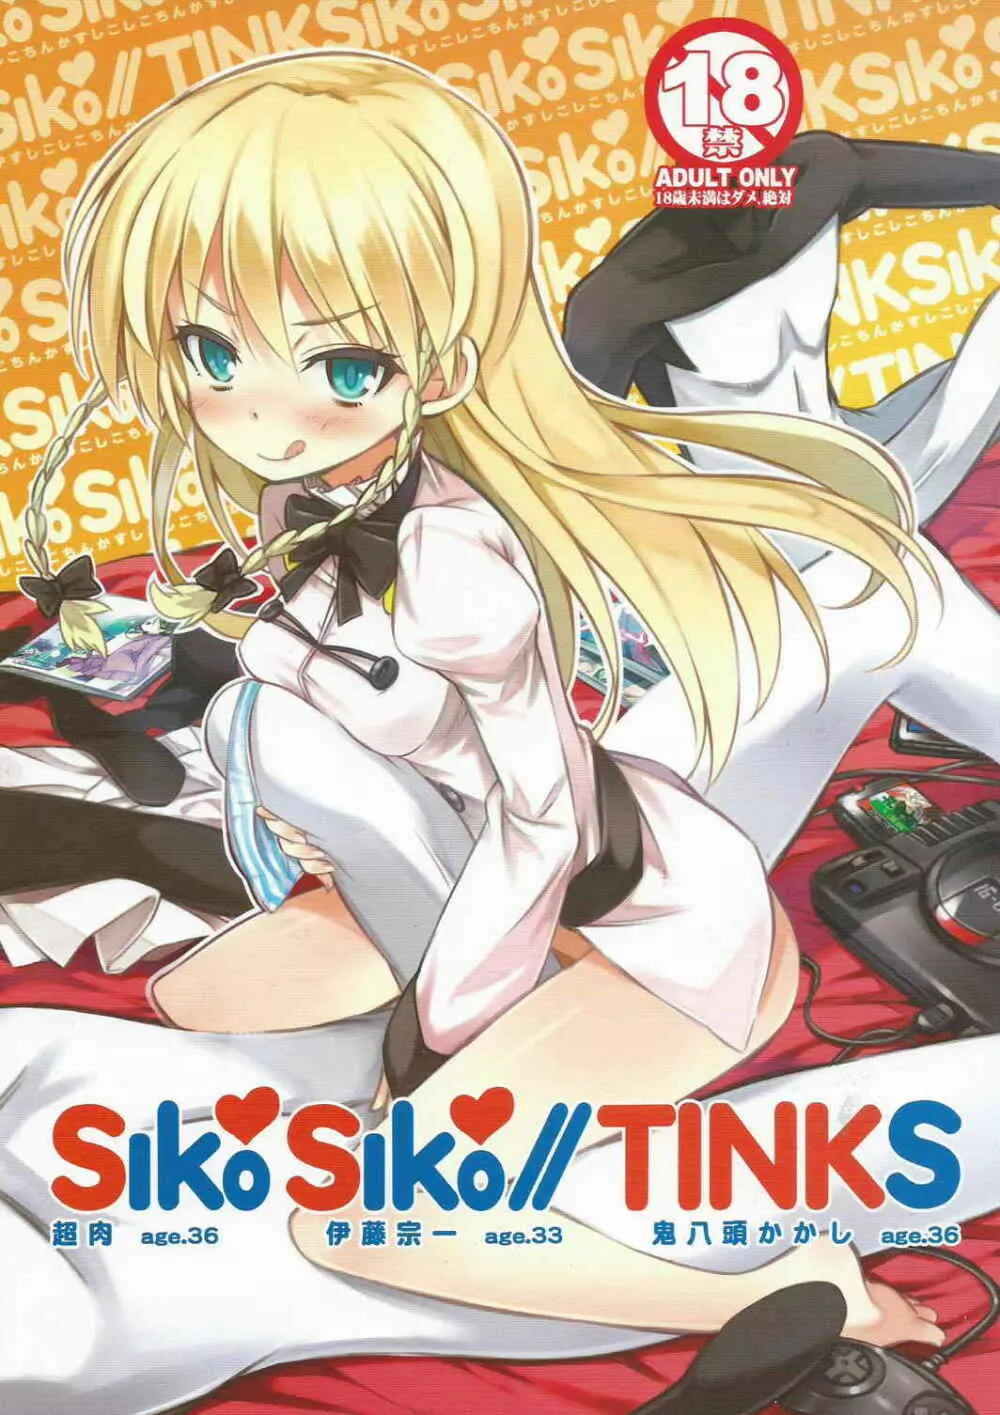 SikoSiko//TINKS